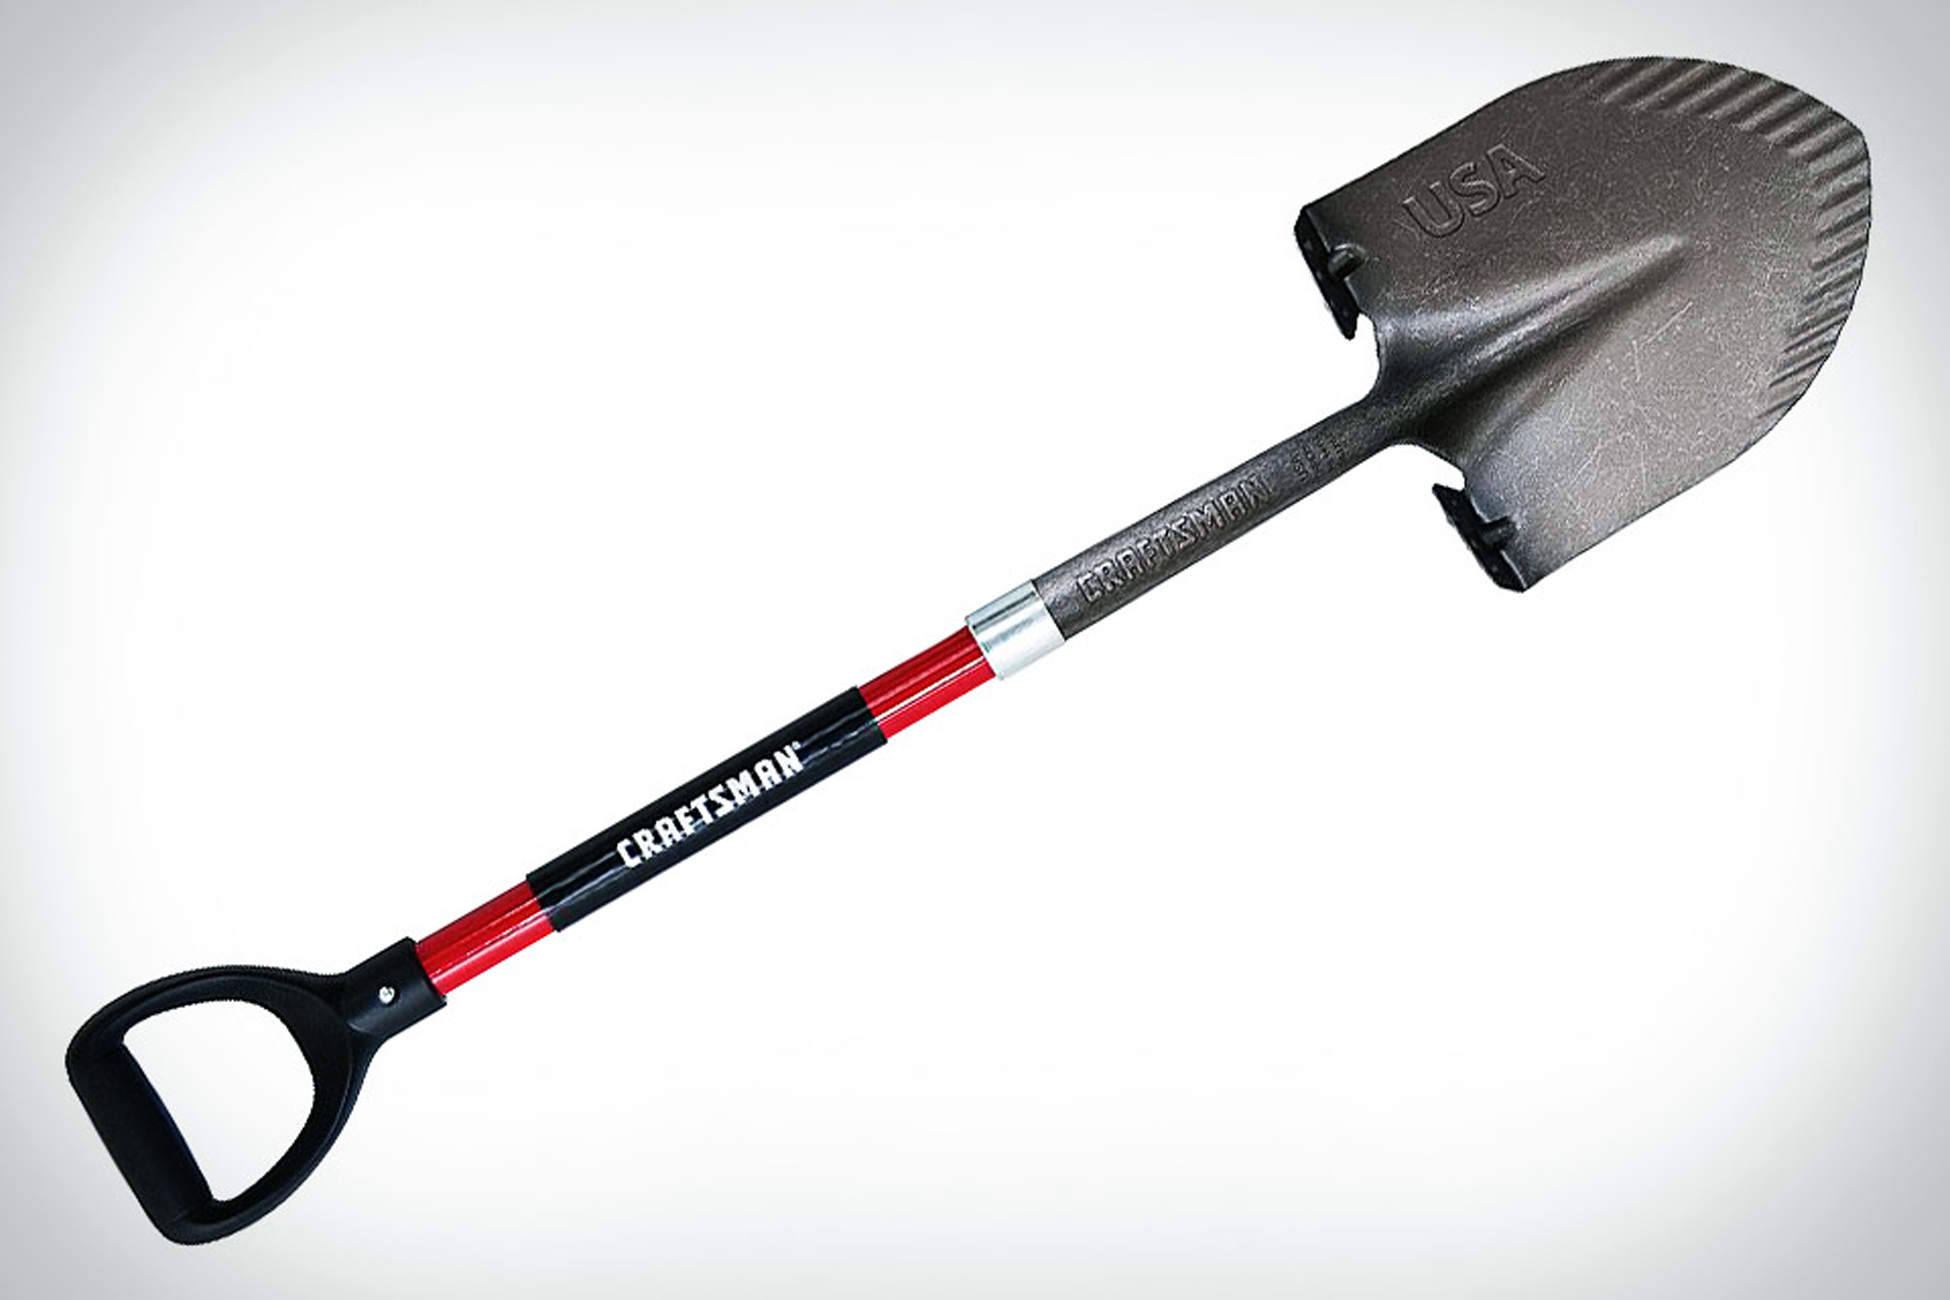 Shovel перевод. Лопата американка Craftsman. Лопата Boker Shovel m1874. Штыковая лопата до 1.5 кг. Лопата штыковая маленькая Садовая.